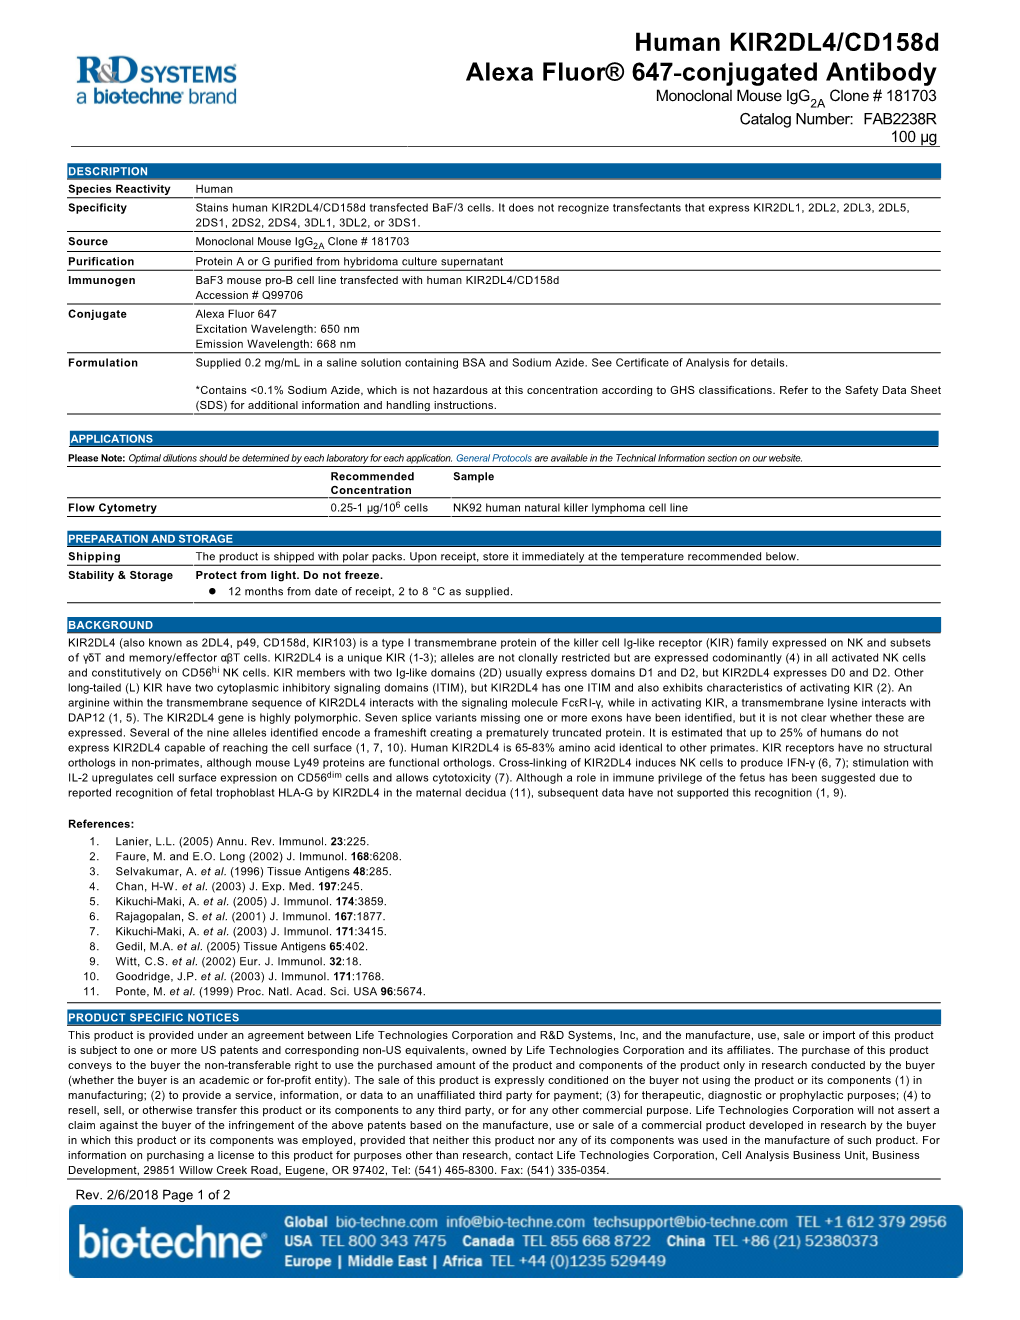 Human KIR2DL4/Cd158d Alexa Fluor® 647-Conjugated Antibody